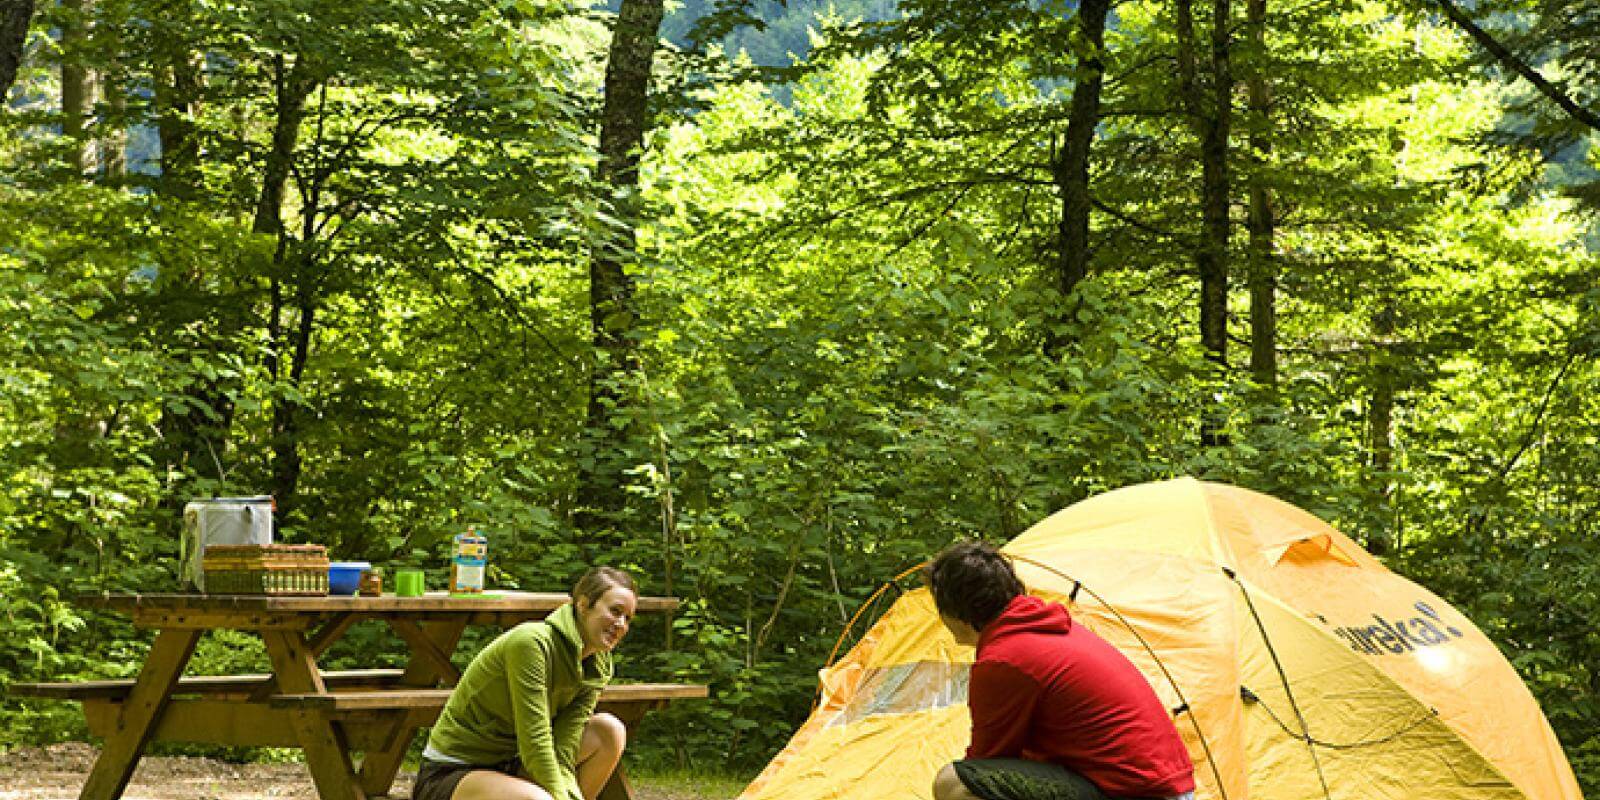 The camp left. Палатка туристическая. Палатка в лесу. Кемпинг на природе. Туризм с палатками.